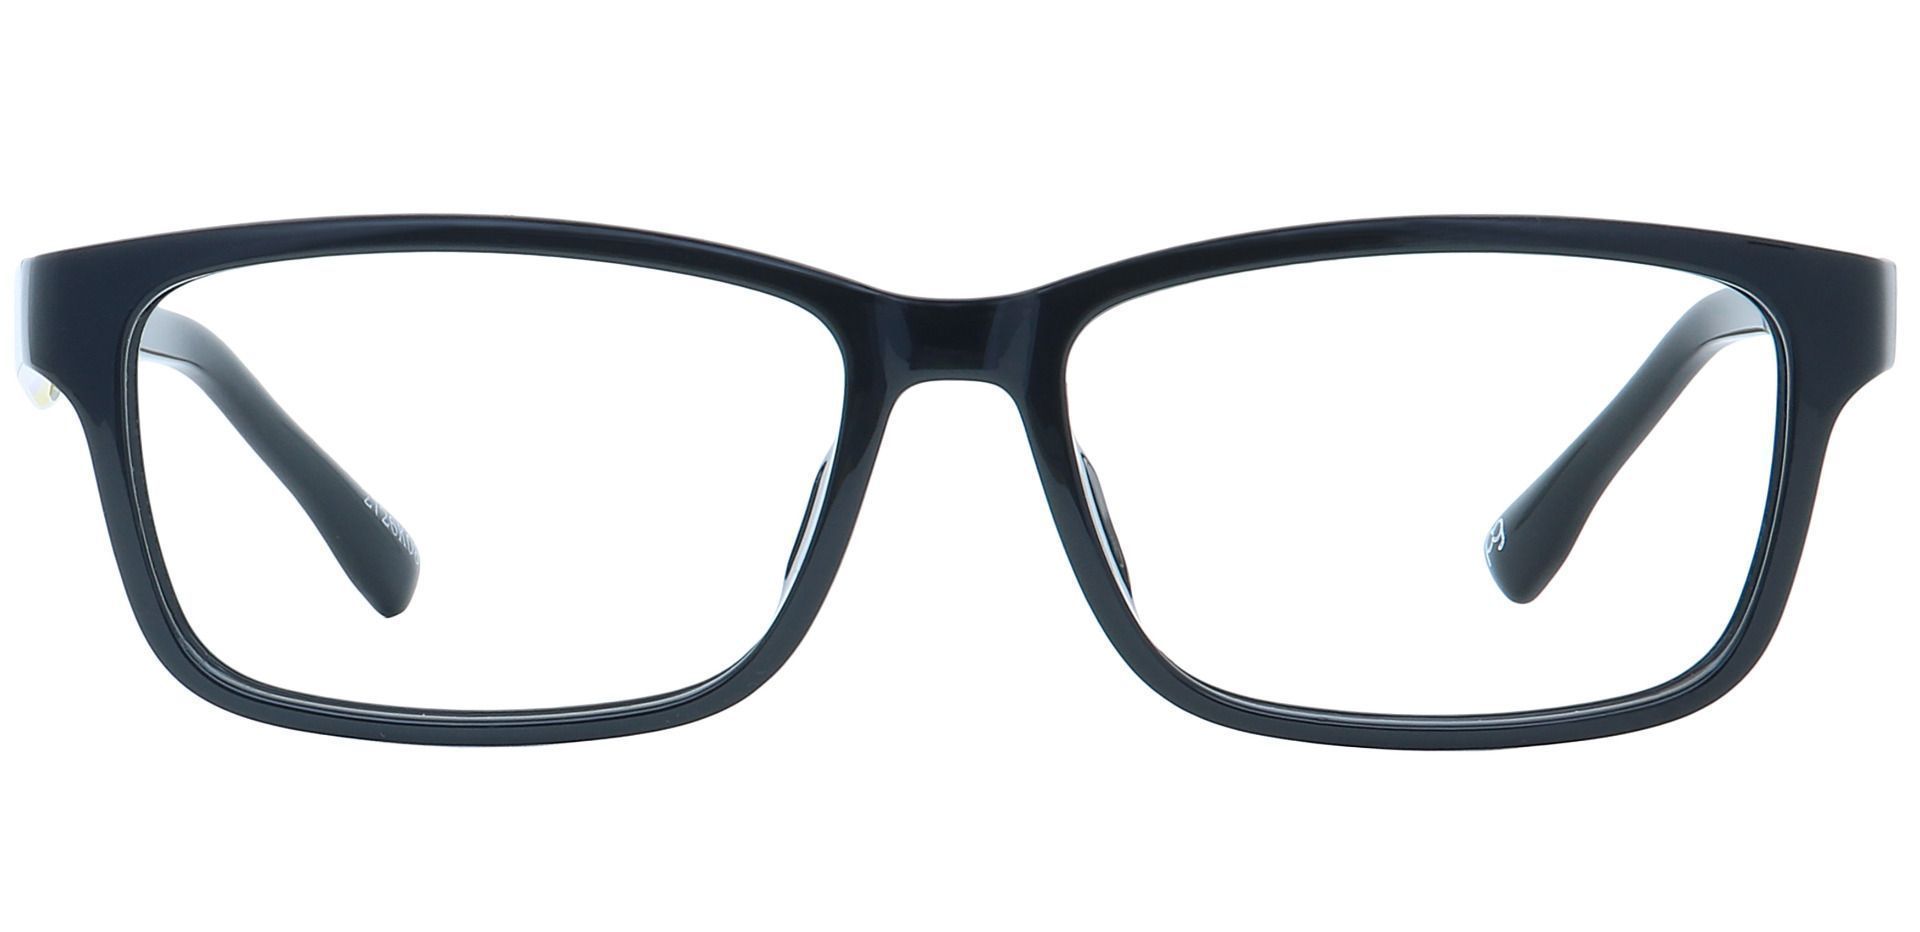 Sol Rectangle Eyeglasses Frame - Black